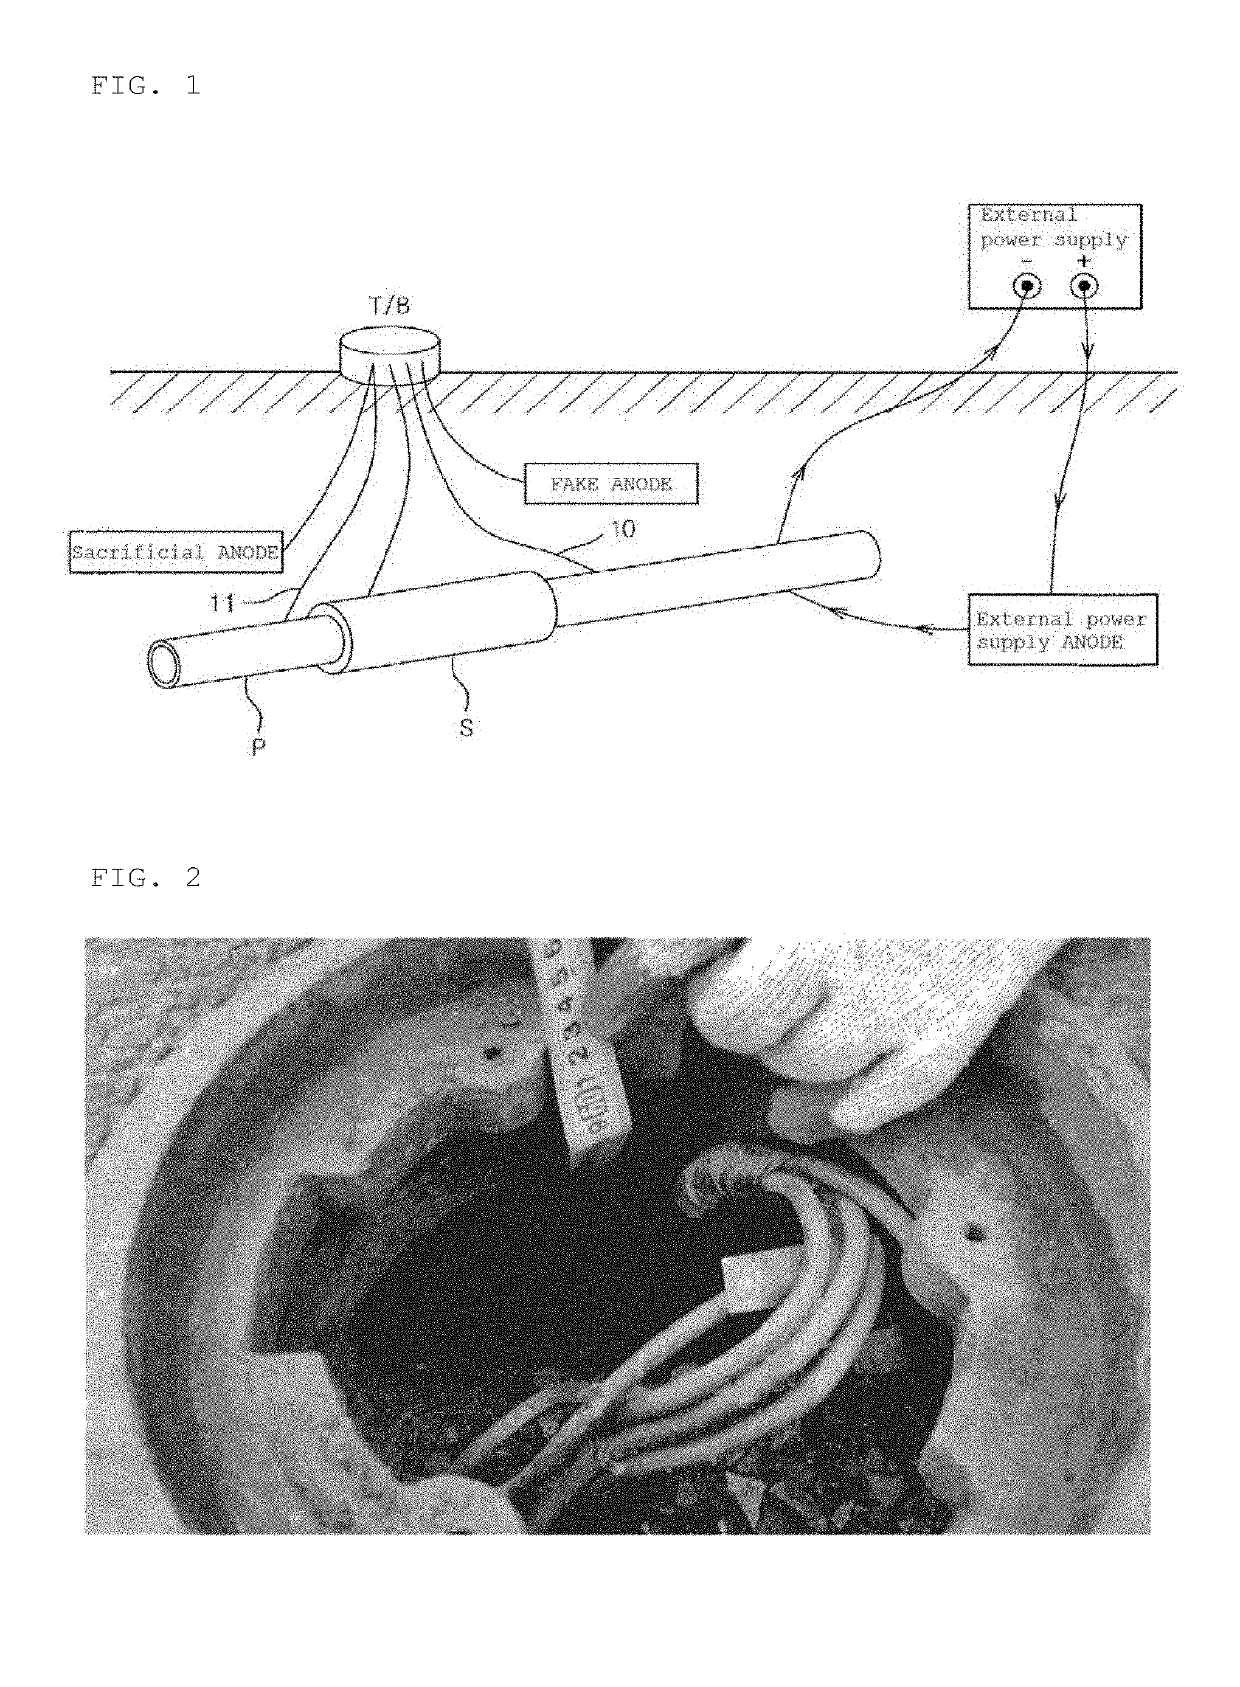 Buried gas pipeline multi-measurement device